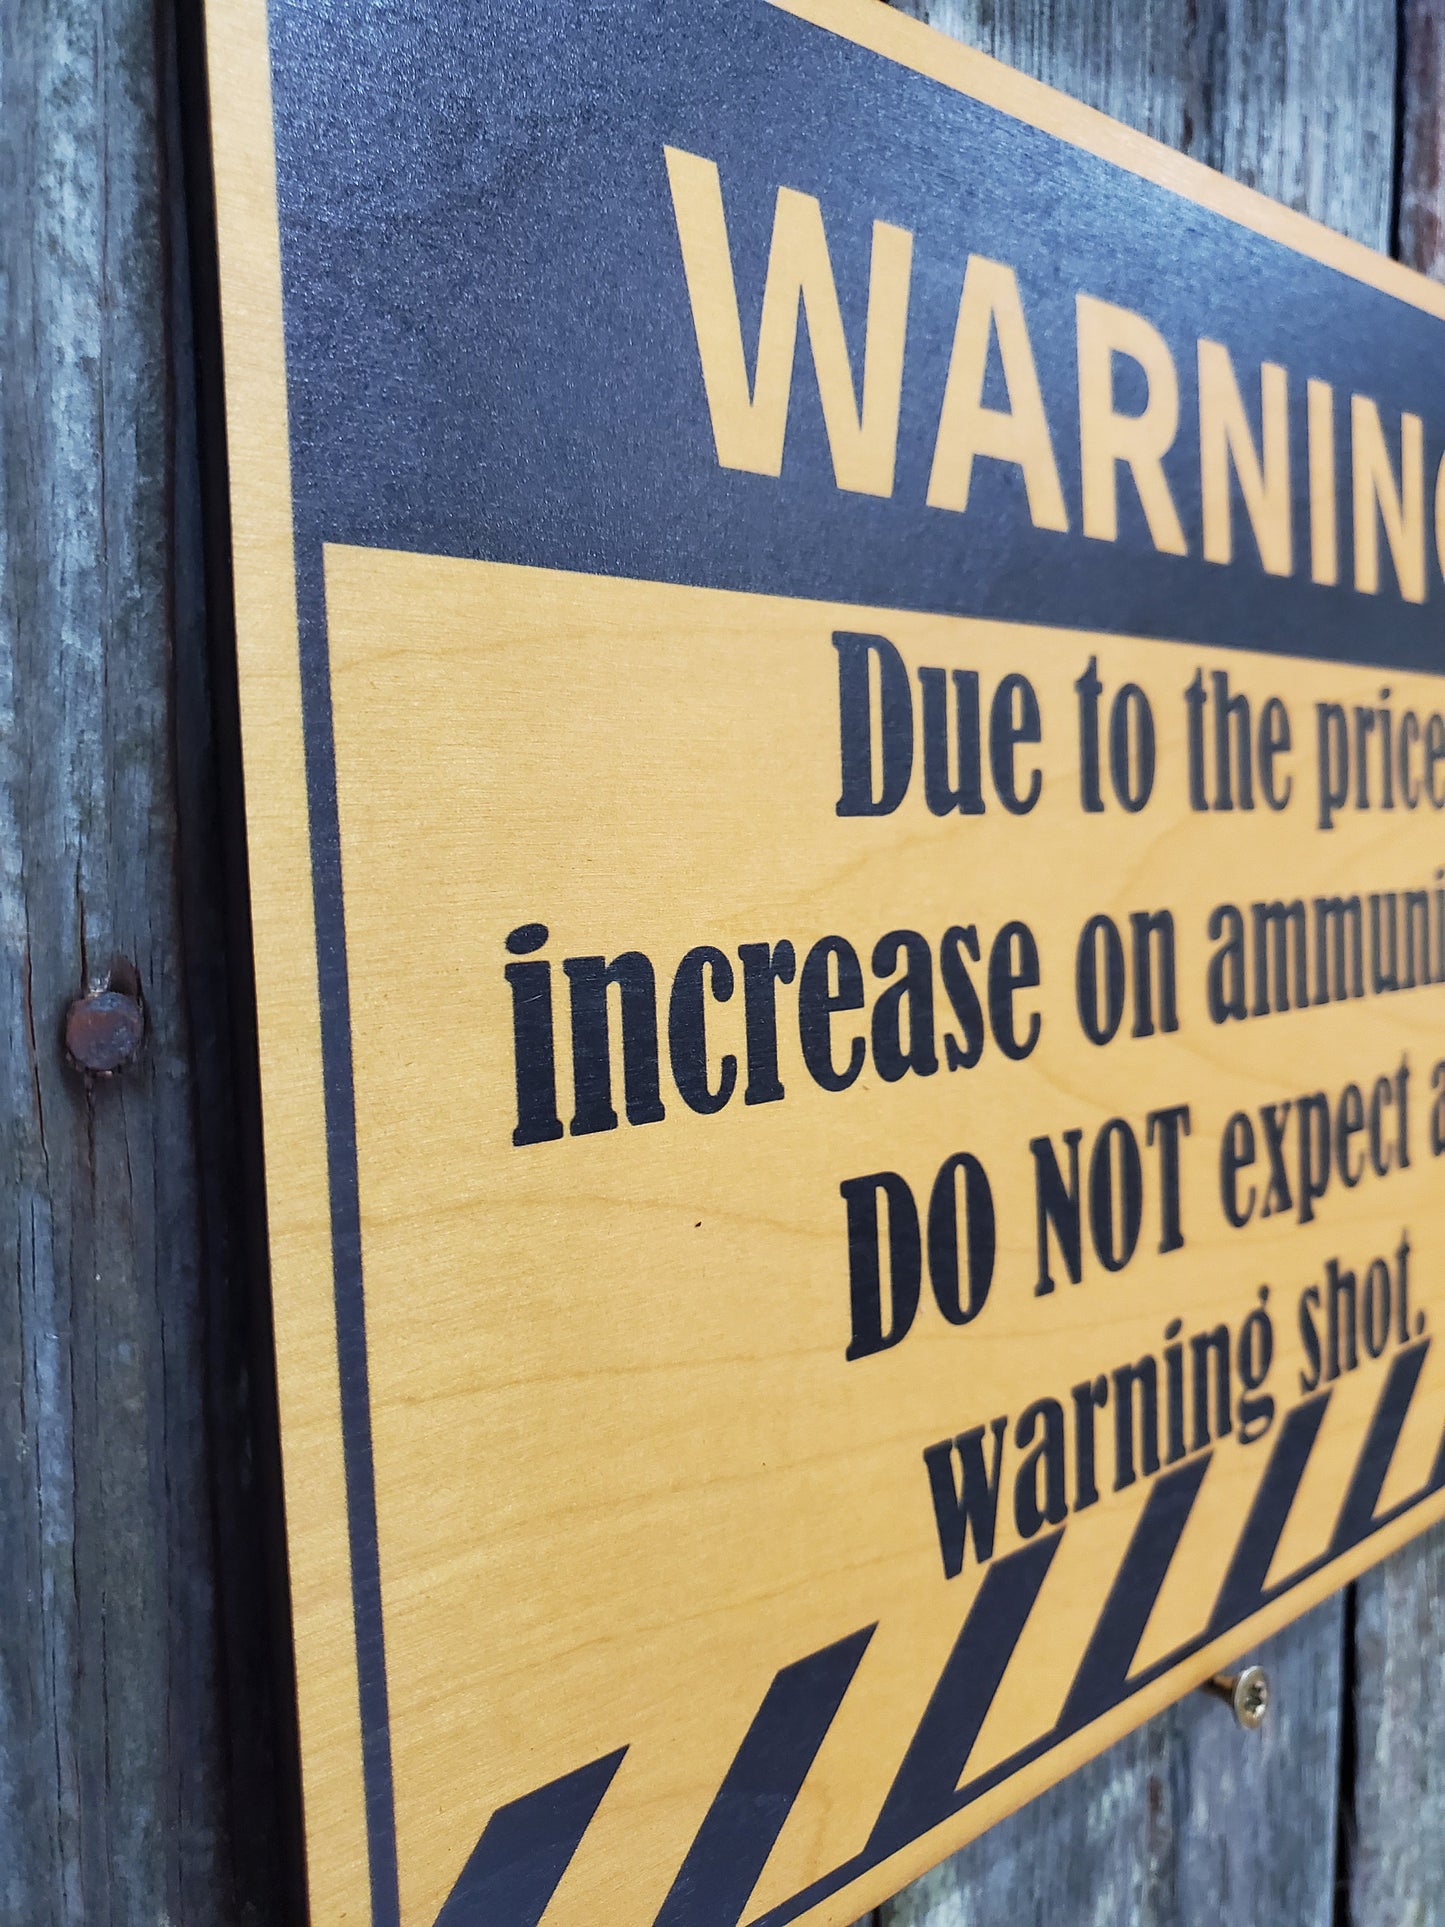 Gun Owner Warning Do Not Expect a Warning Shot No Trespassing Wooden Front Door Entry Way Decor Plaque Wood Print